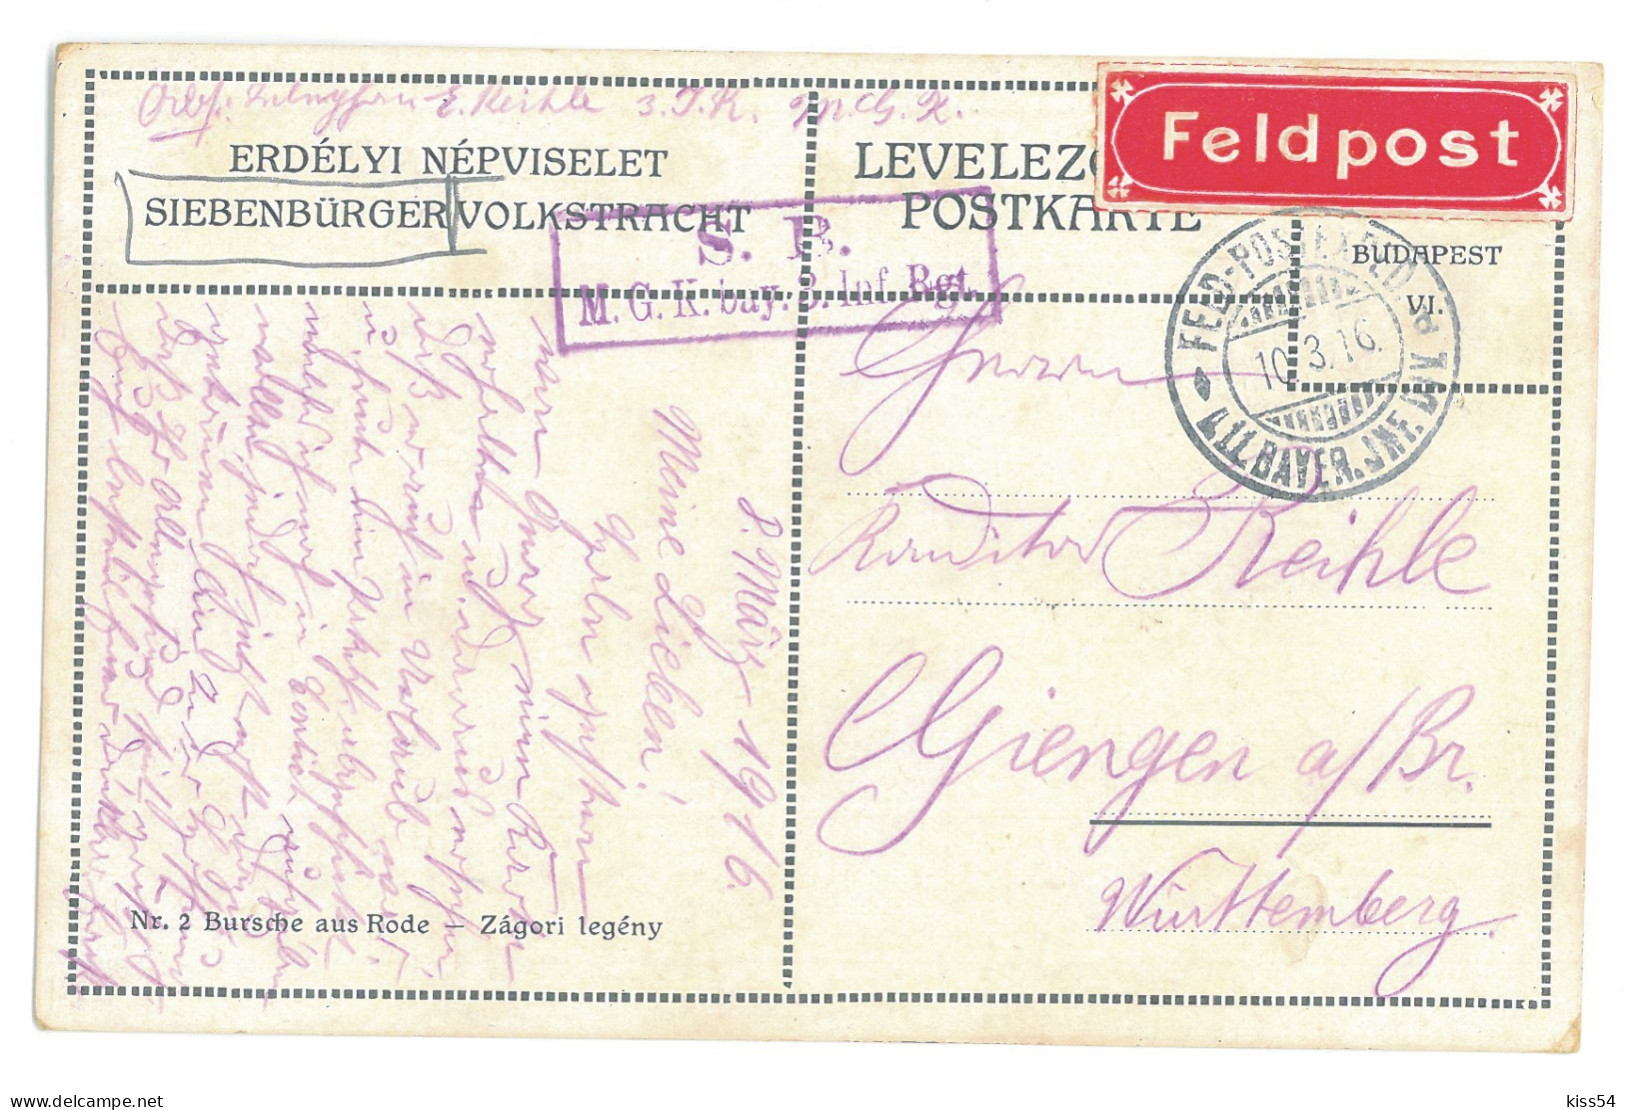 RO 35 - 18718 Ardeal ETHNIC FAMILY, Romania - Old Postcard, CENSOR - Used - 1916 - Romania